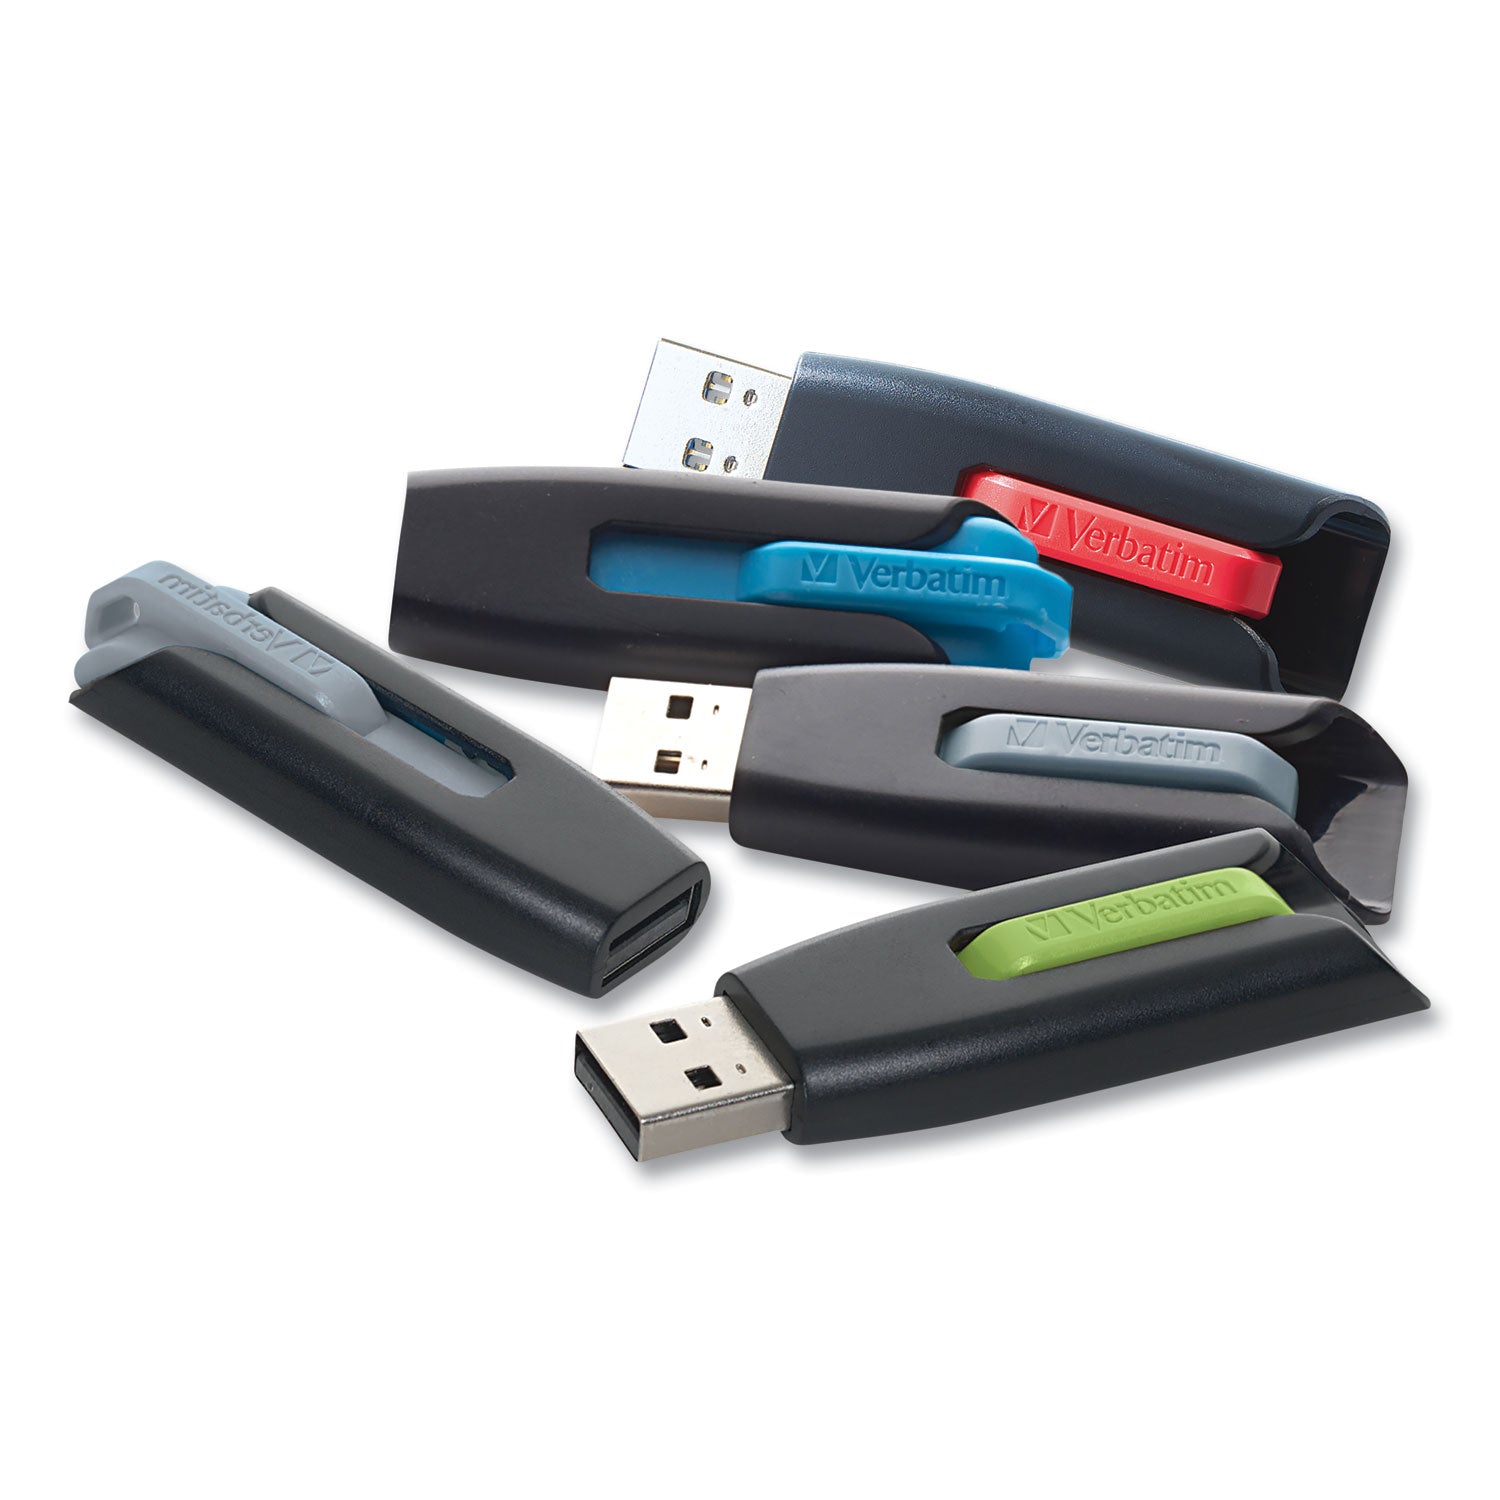 Store 'n' Go V3 USB 3.0 Drive, 16 GB, Black/Gray - 